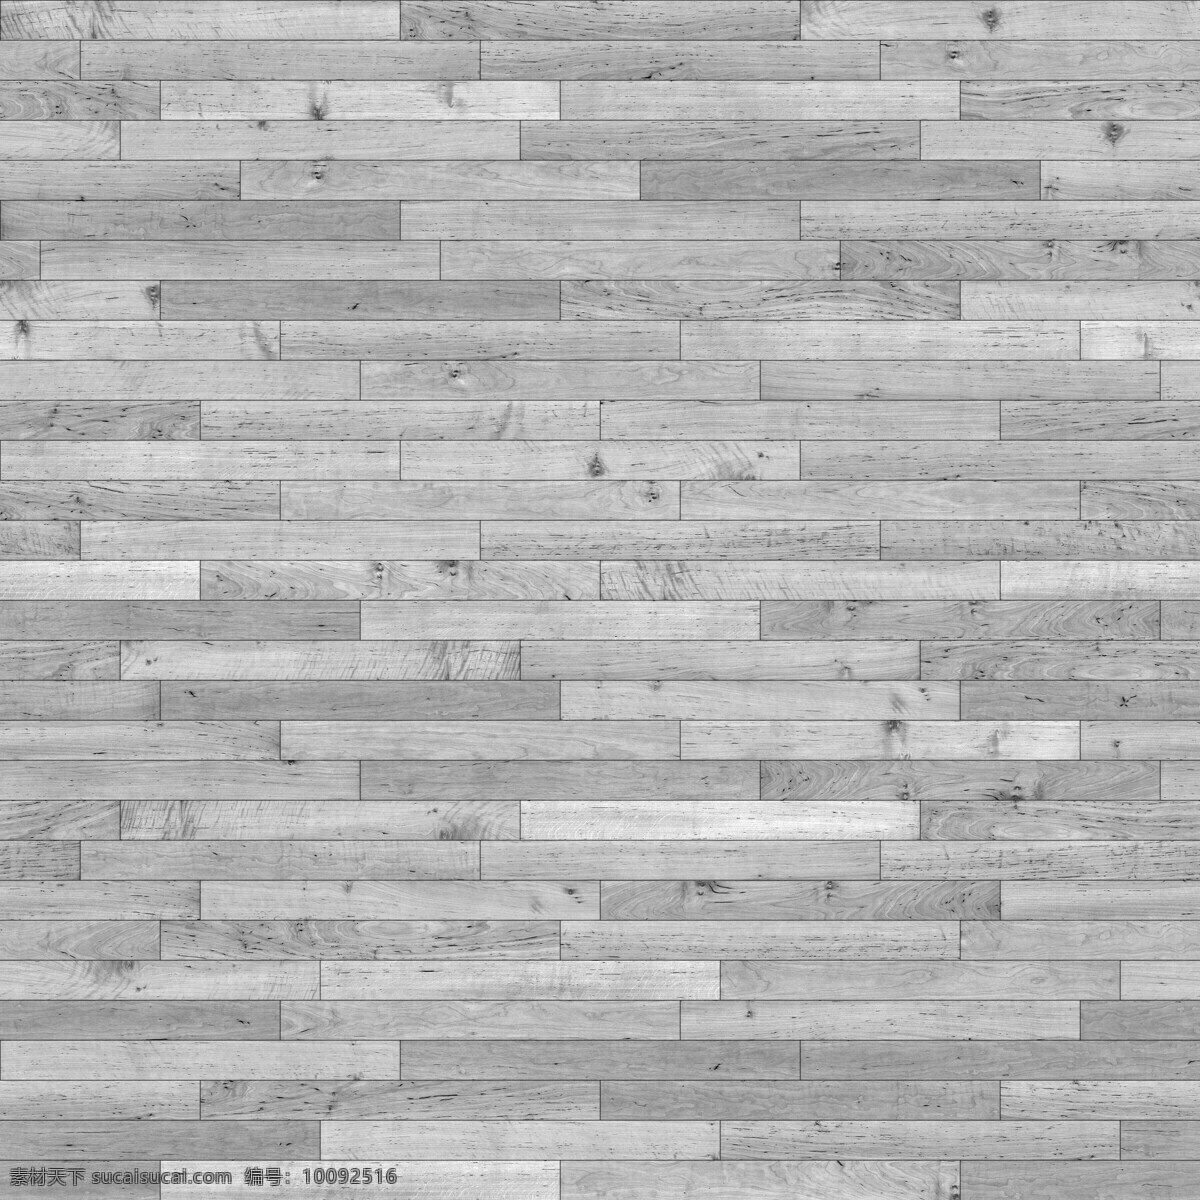 vray 木地板 材质 max9 木材 有贴图 3d模型素材 材质贴图